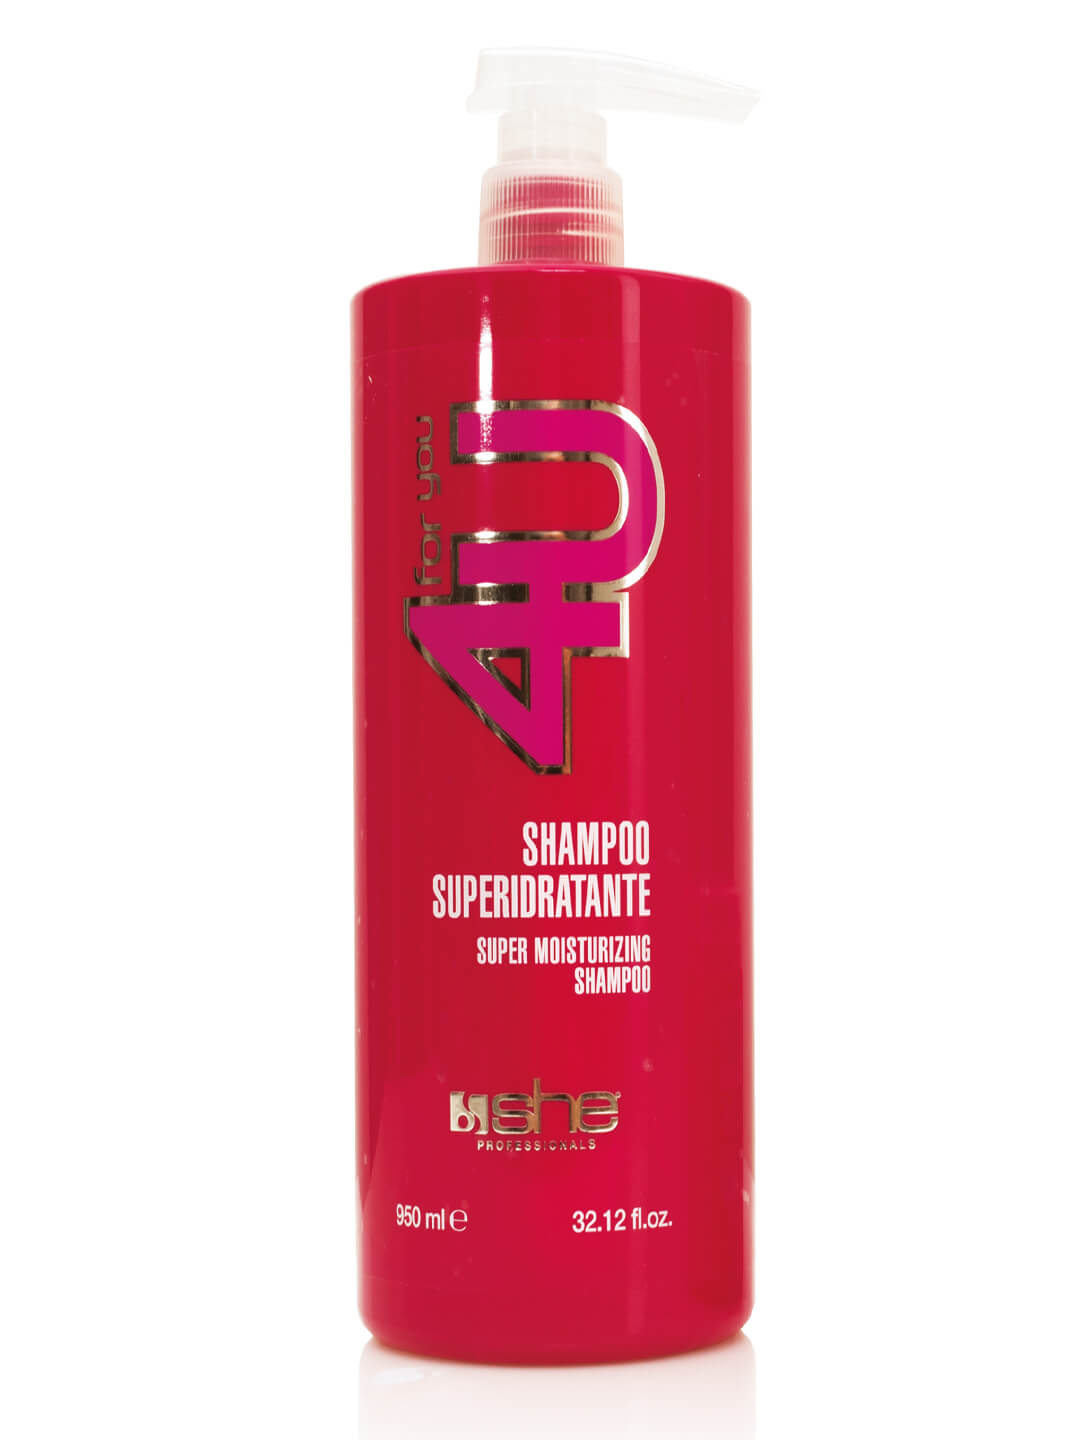 Extensions Shampoo 950 ml product image - 71fba350f8a13118ef7d66e9a98e1b721f103edf888f44a537ede0bb5696a226